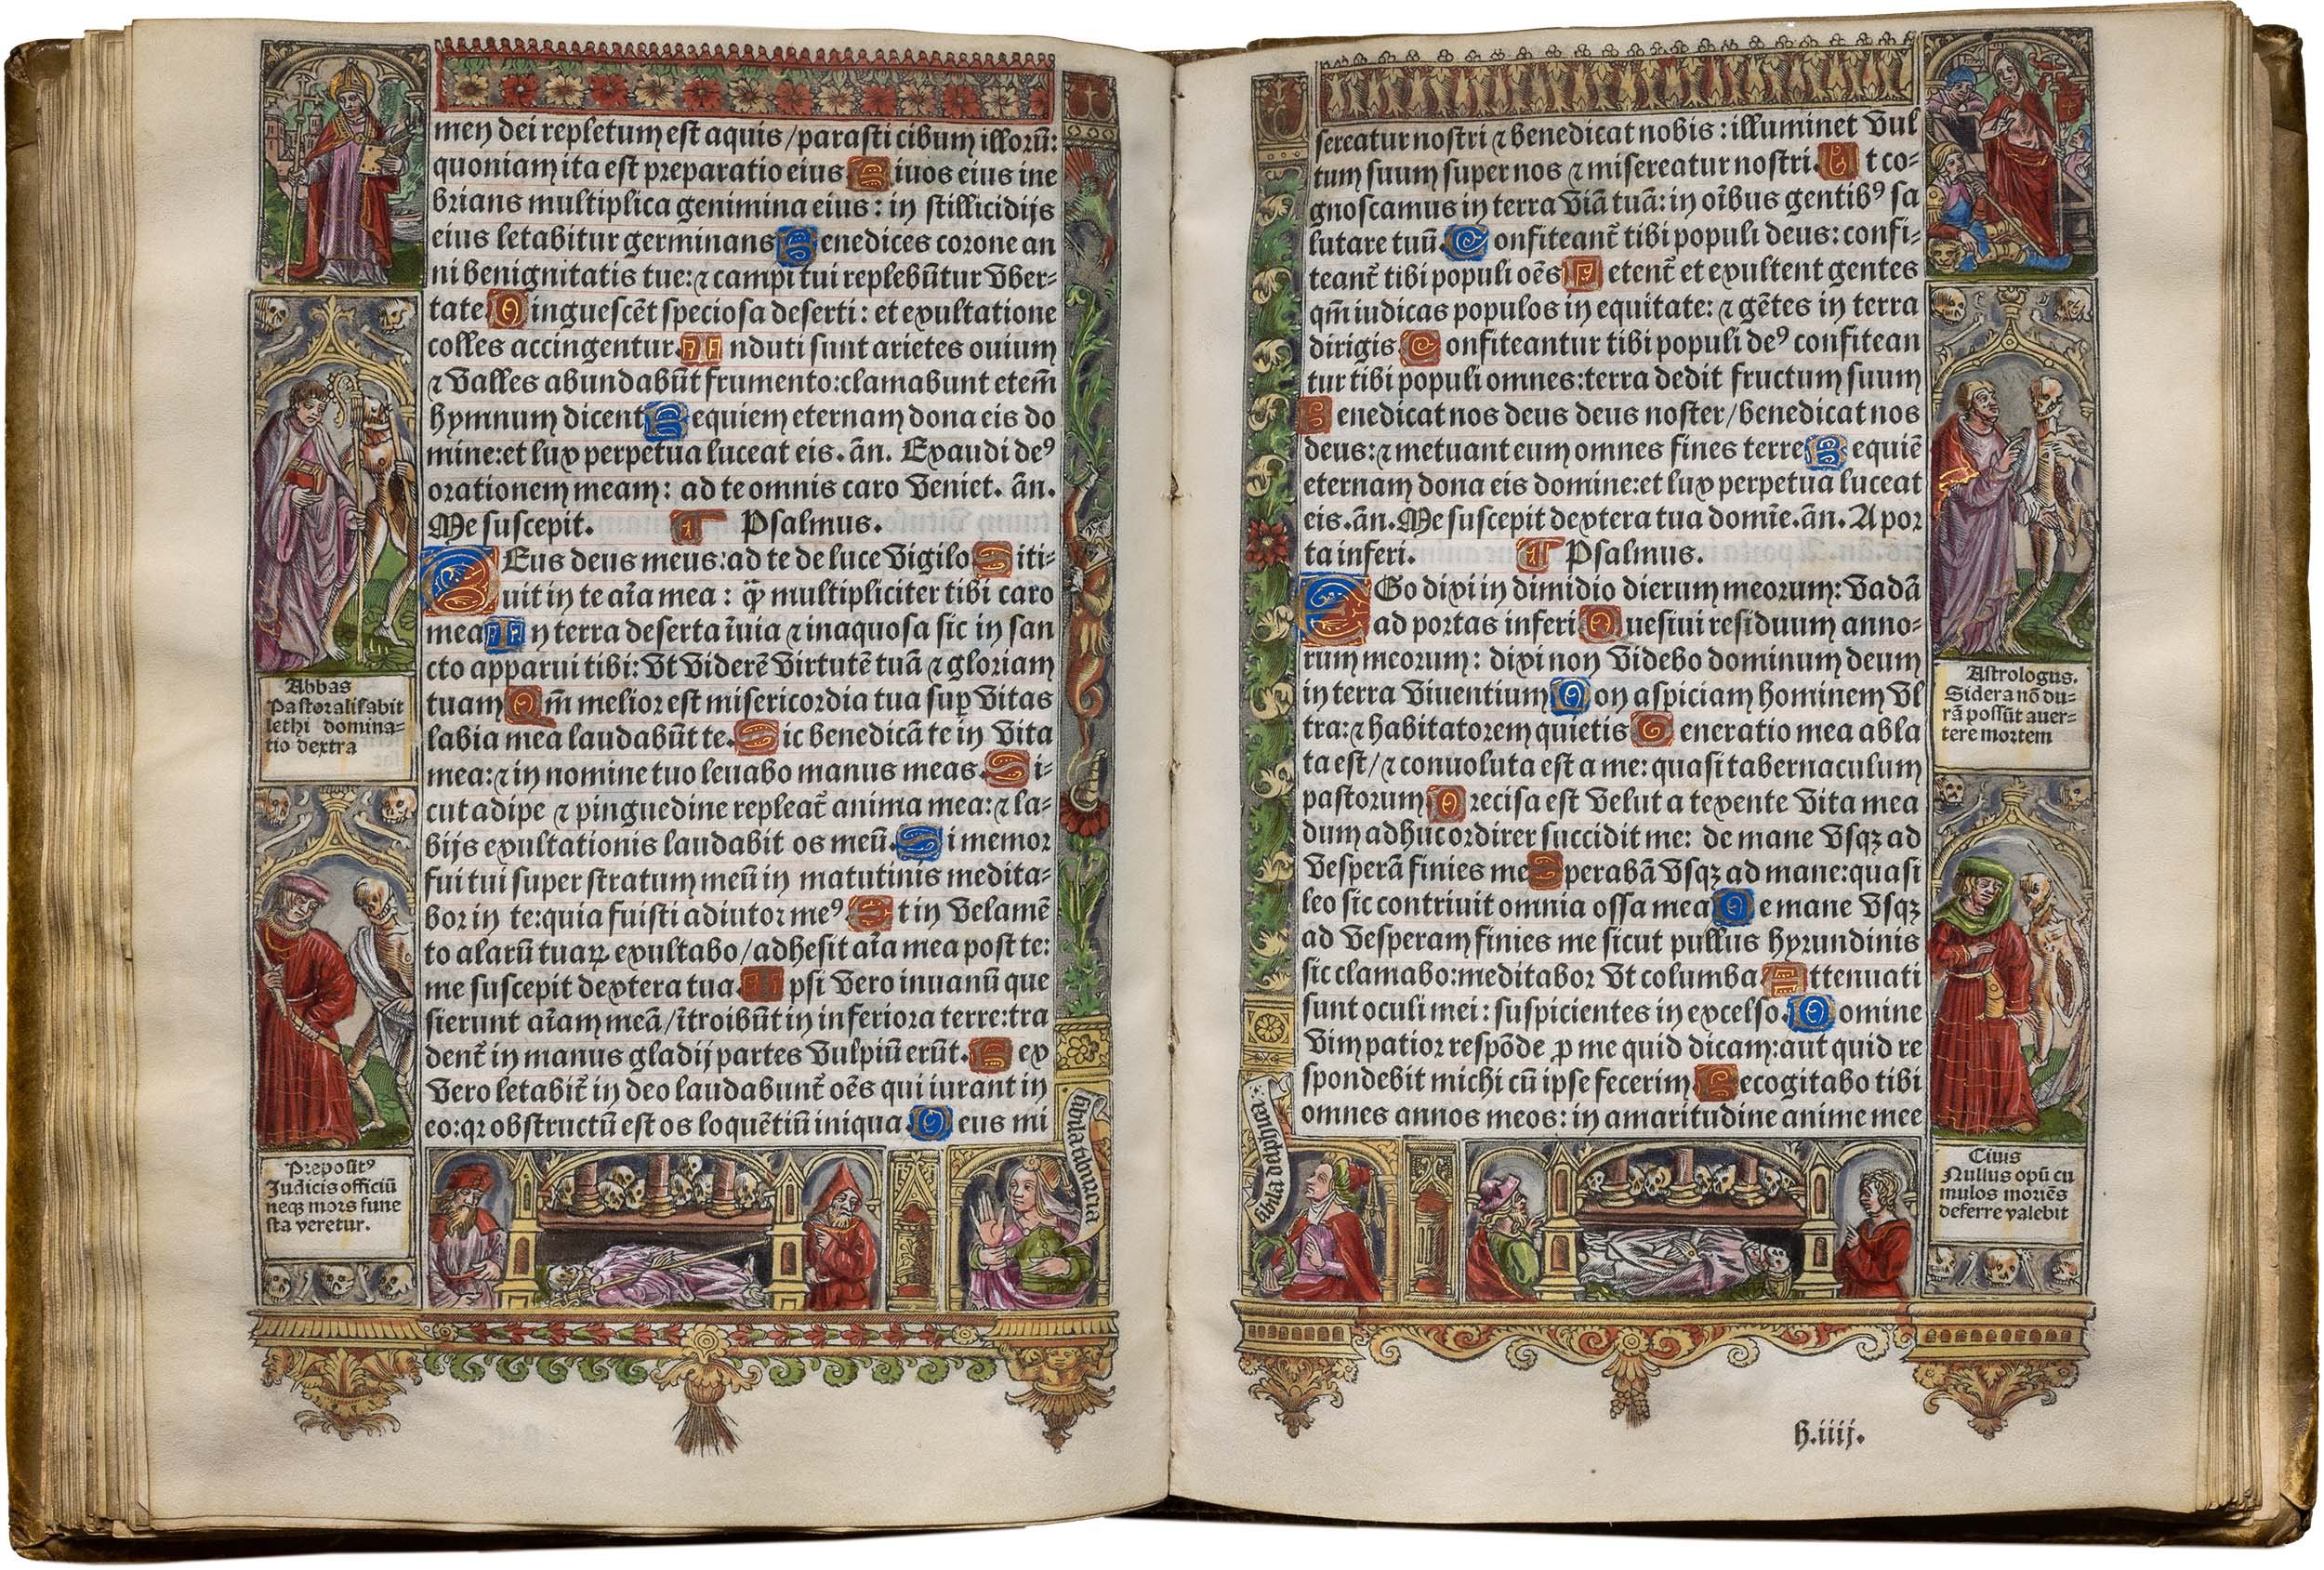 Horae-bmv-31-march-1511-kerver-printed-book-of-hours-illuminated-copy-vellum-63.jpg